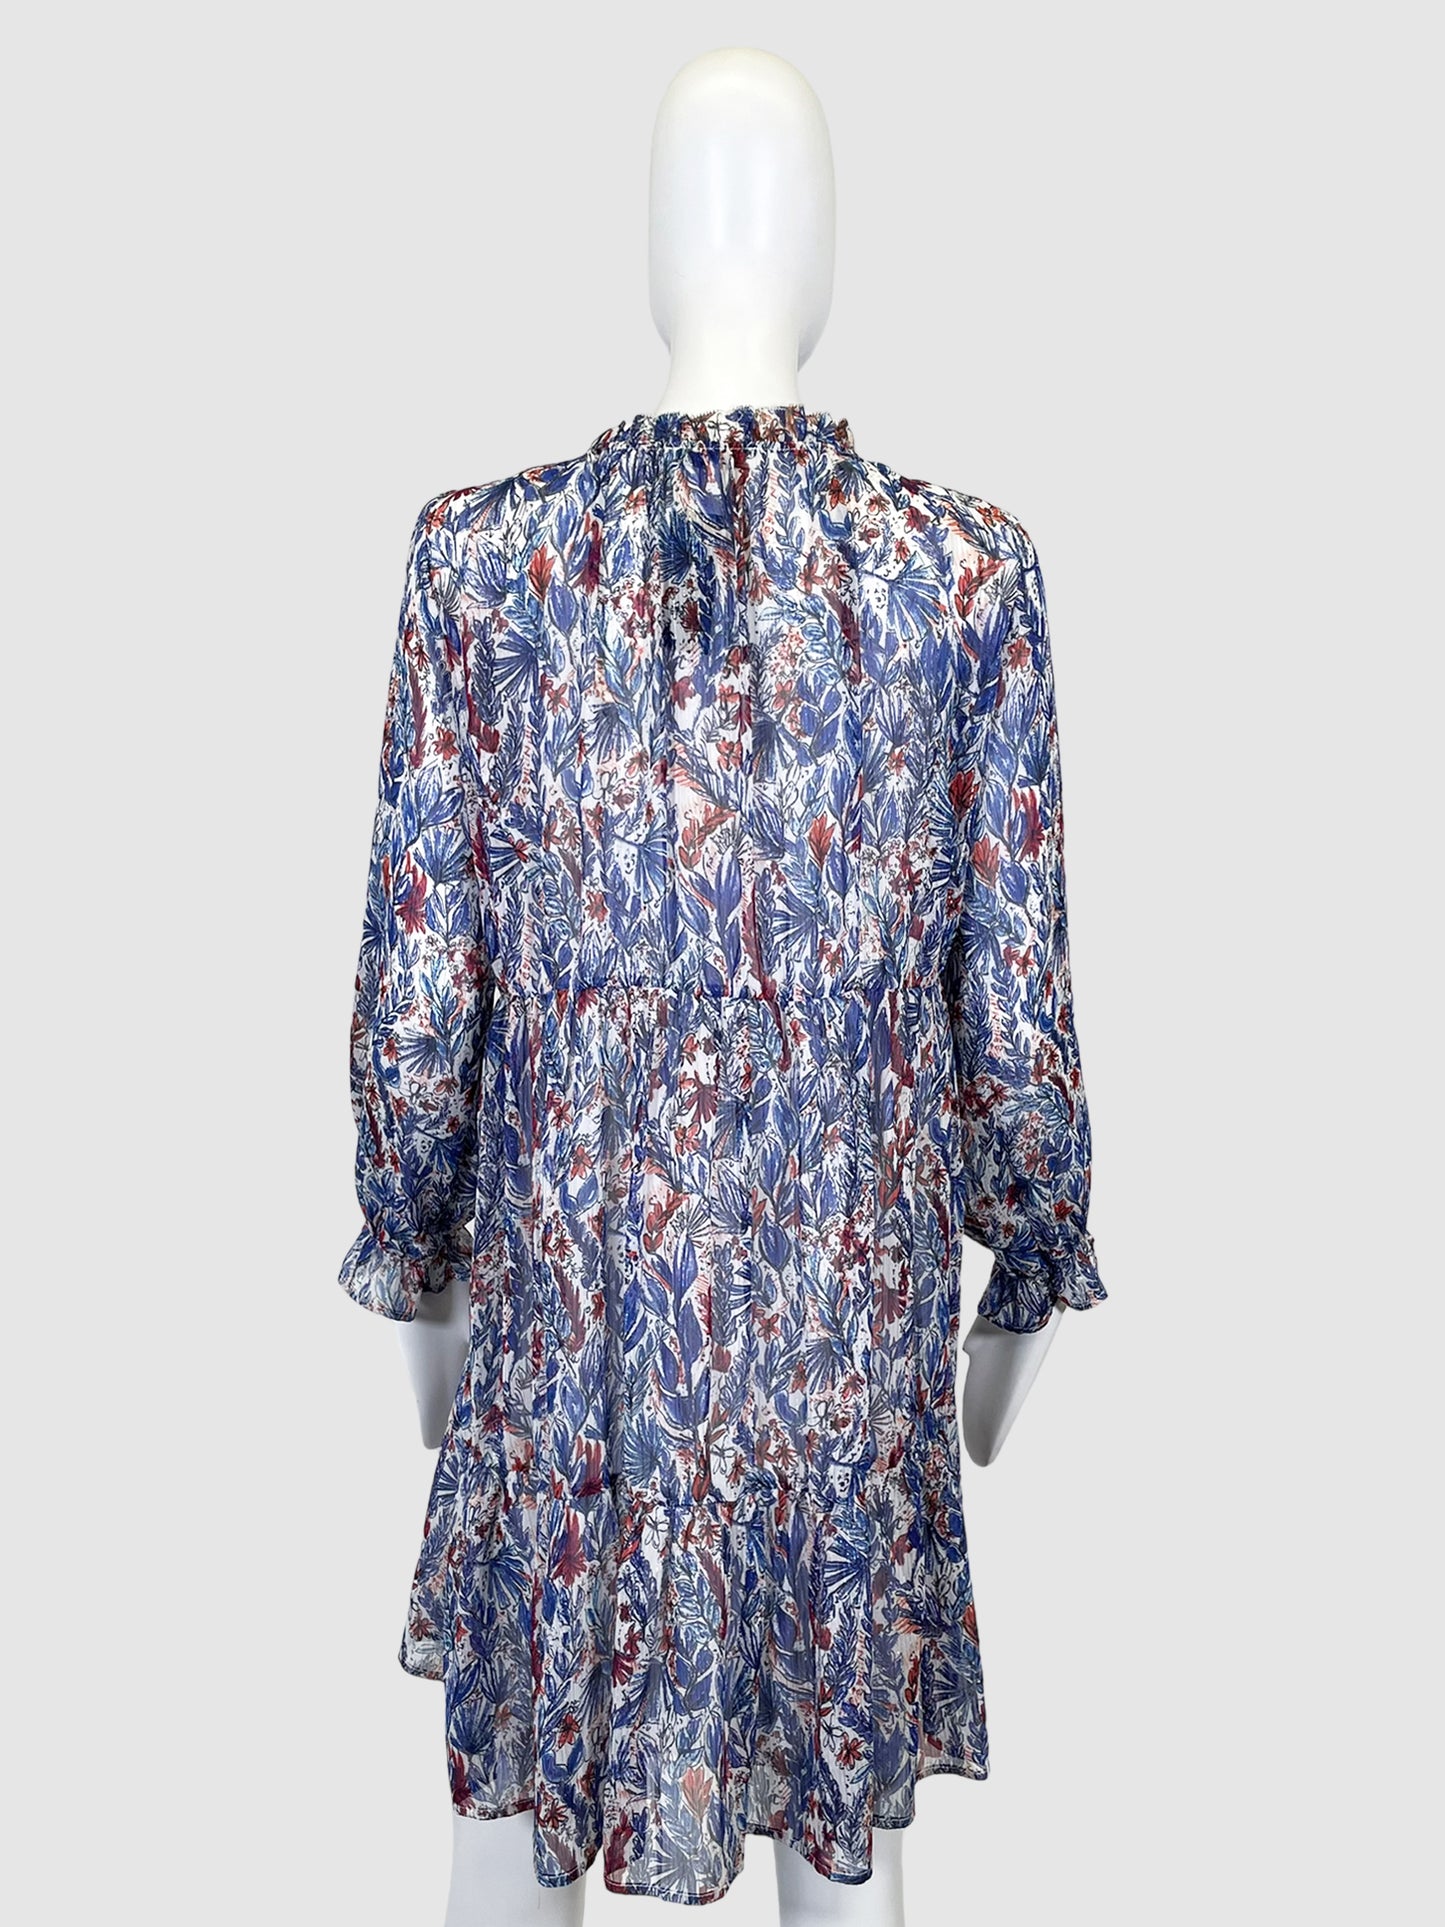 Floral Print Dress - Size M